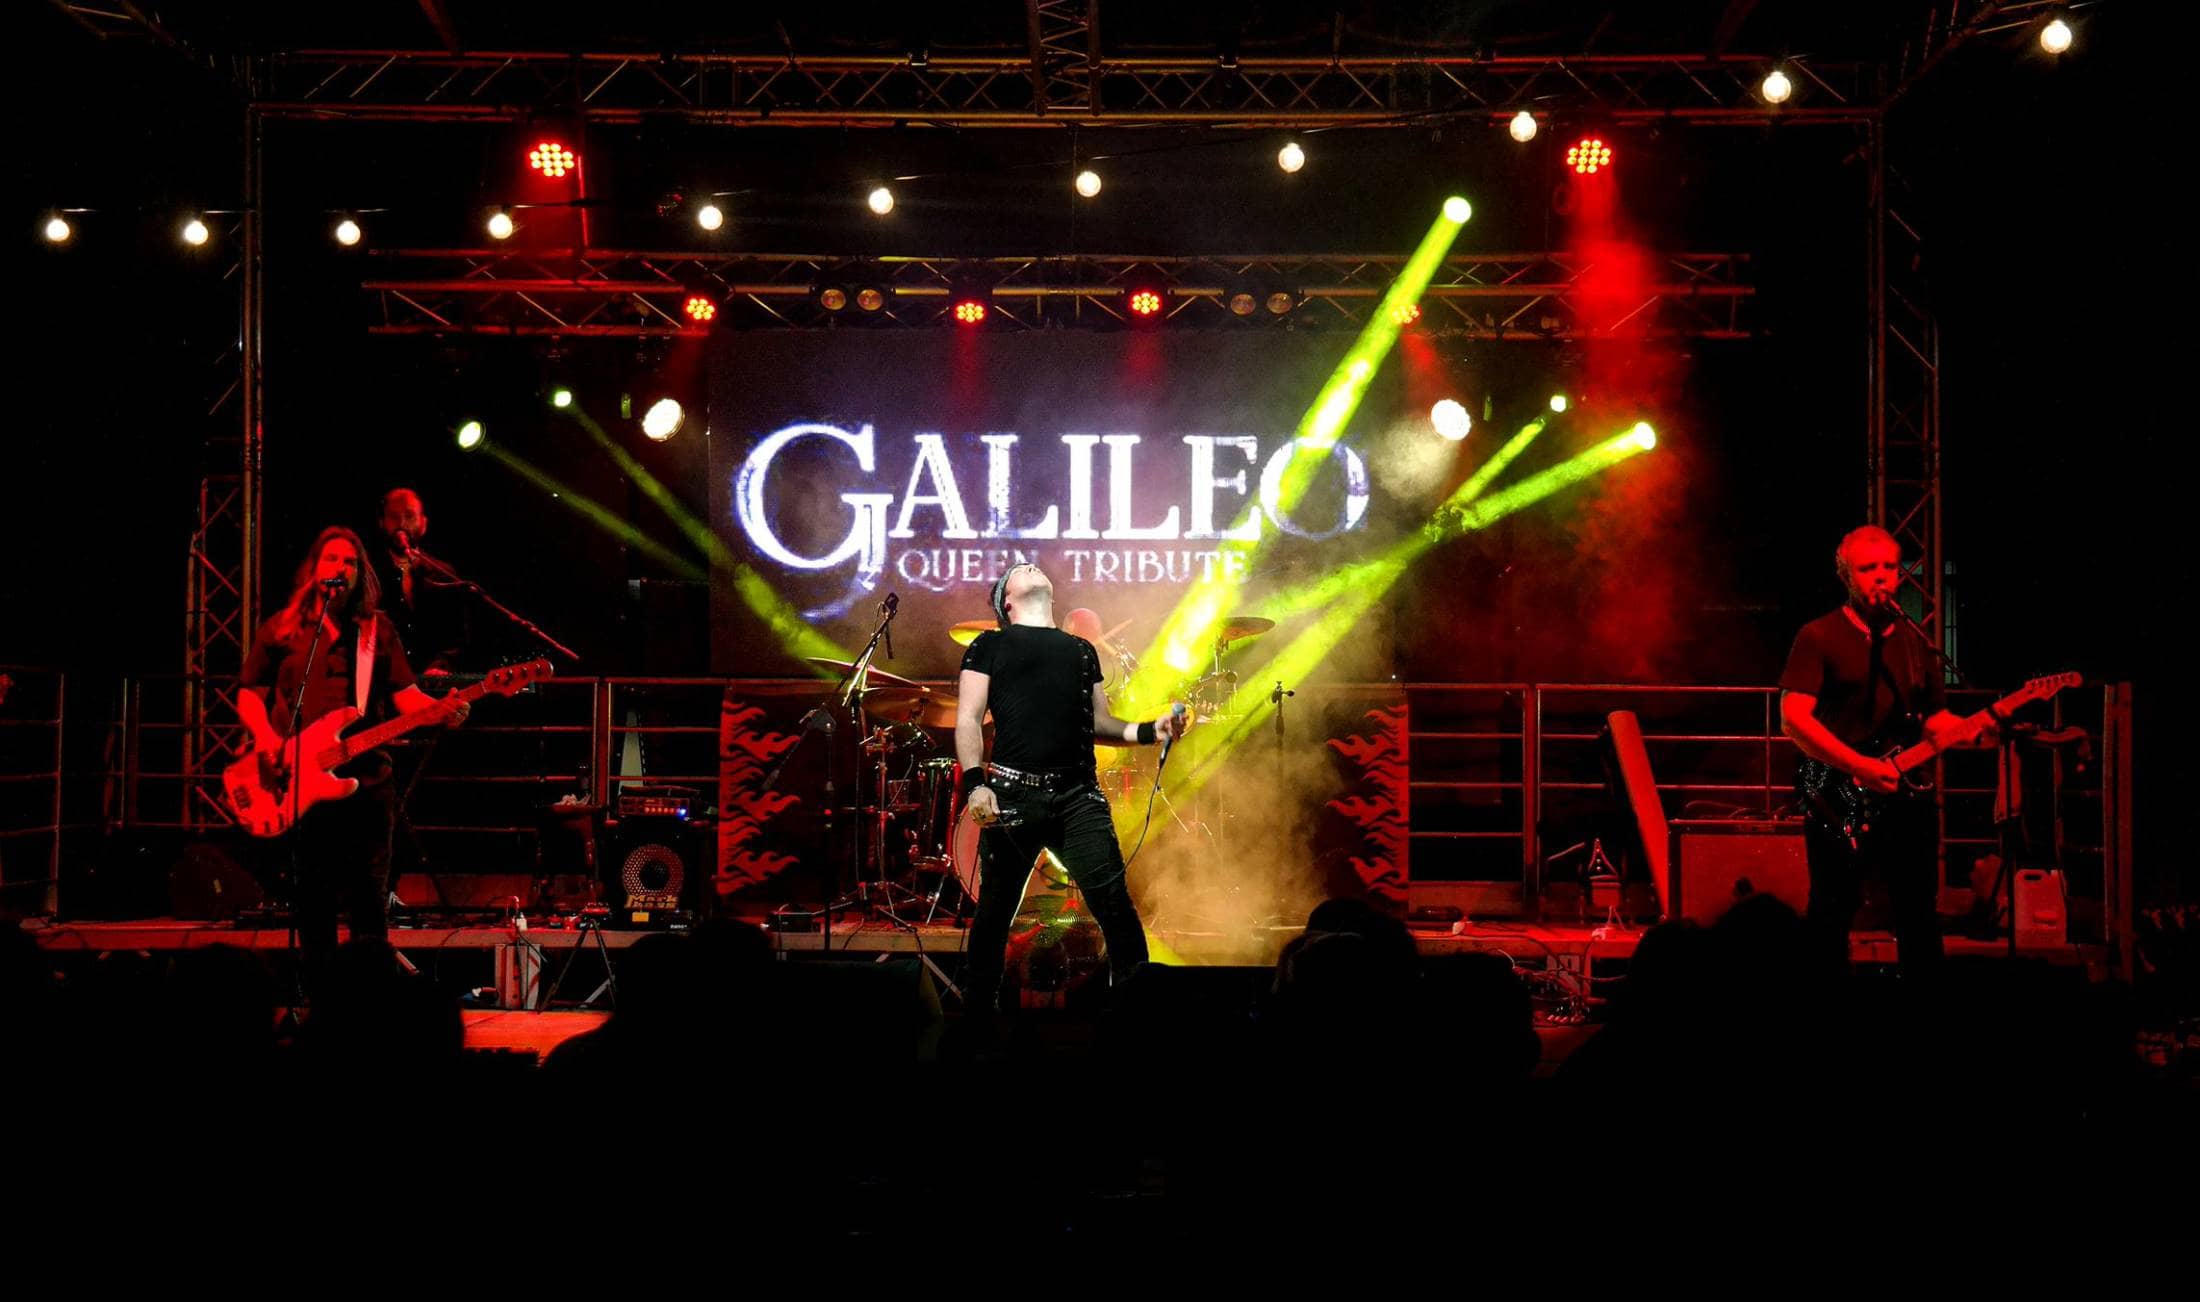 Galileo (IT) avec Mike Moran & Graciela Dorbessan